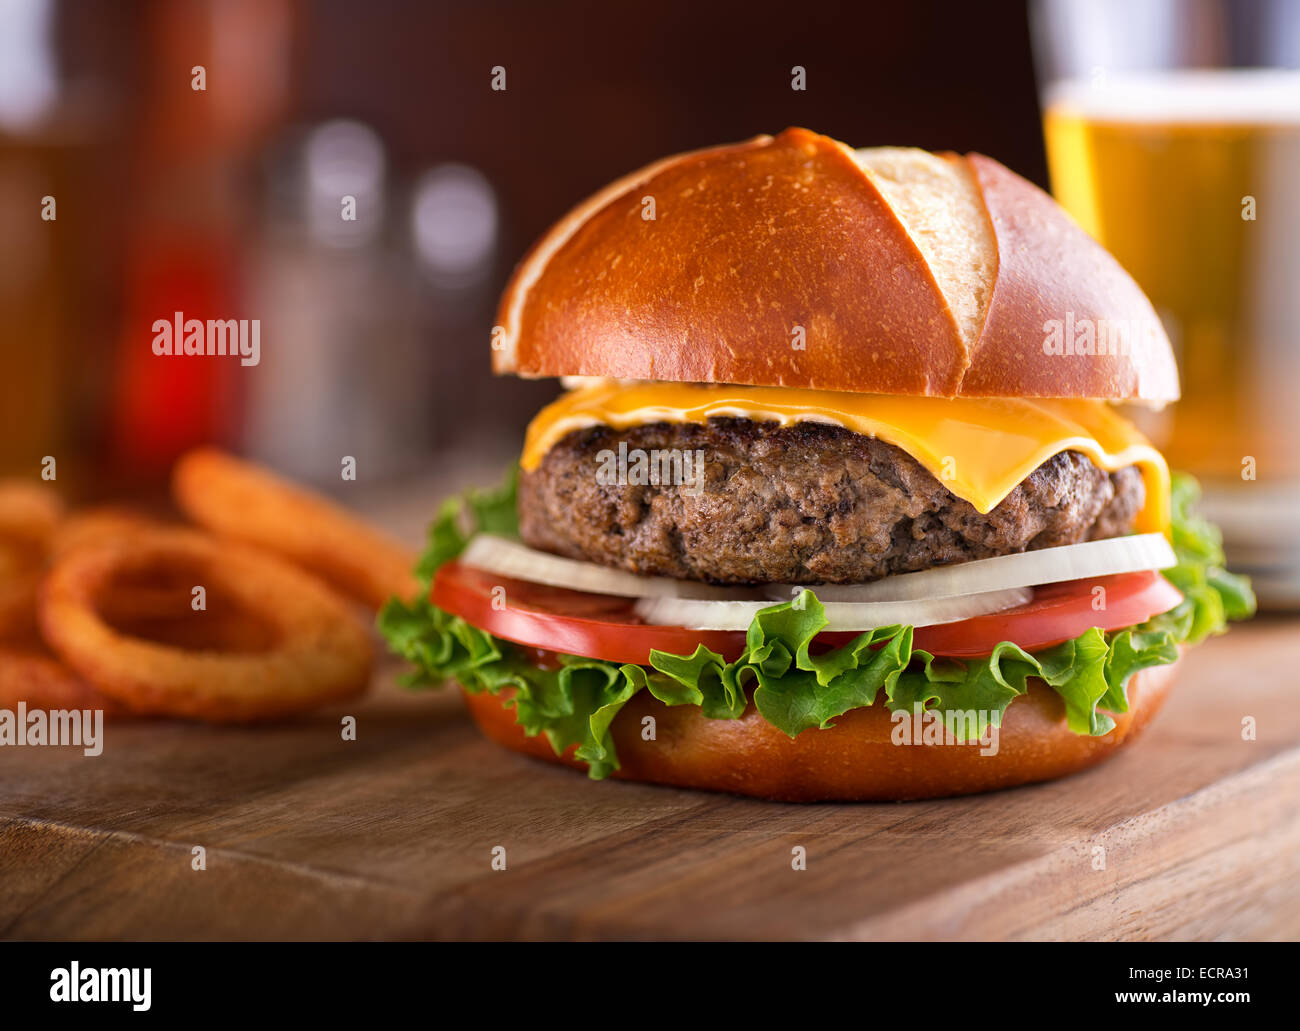 A delicious gourmet cheeseburger on a pretzel bun with lettuce, onion, and tomato. Stock Photo